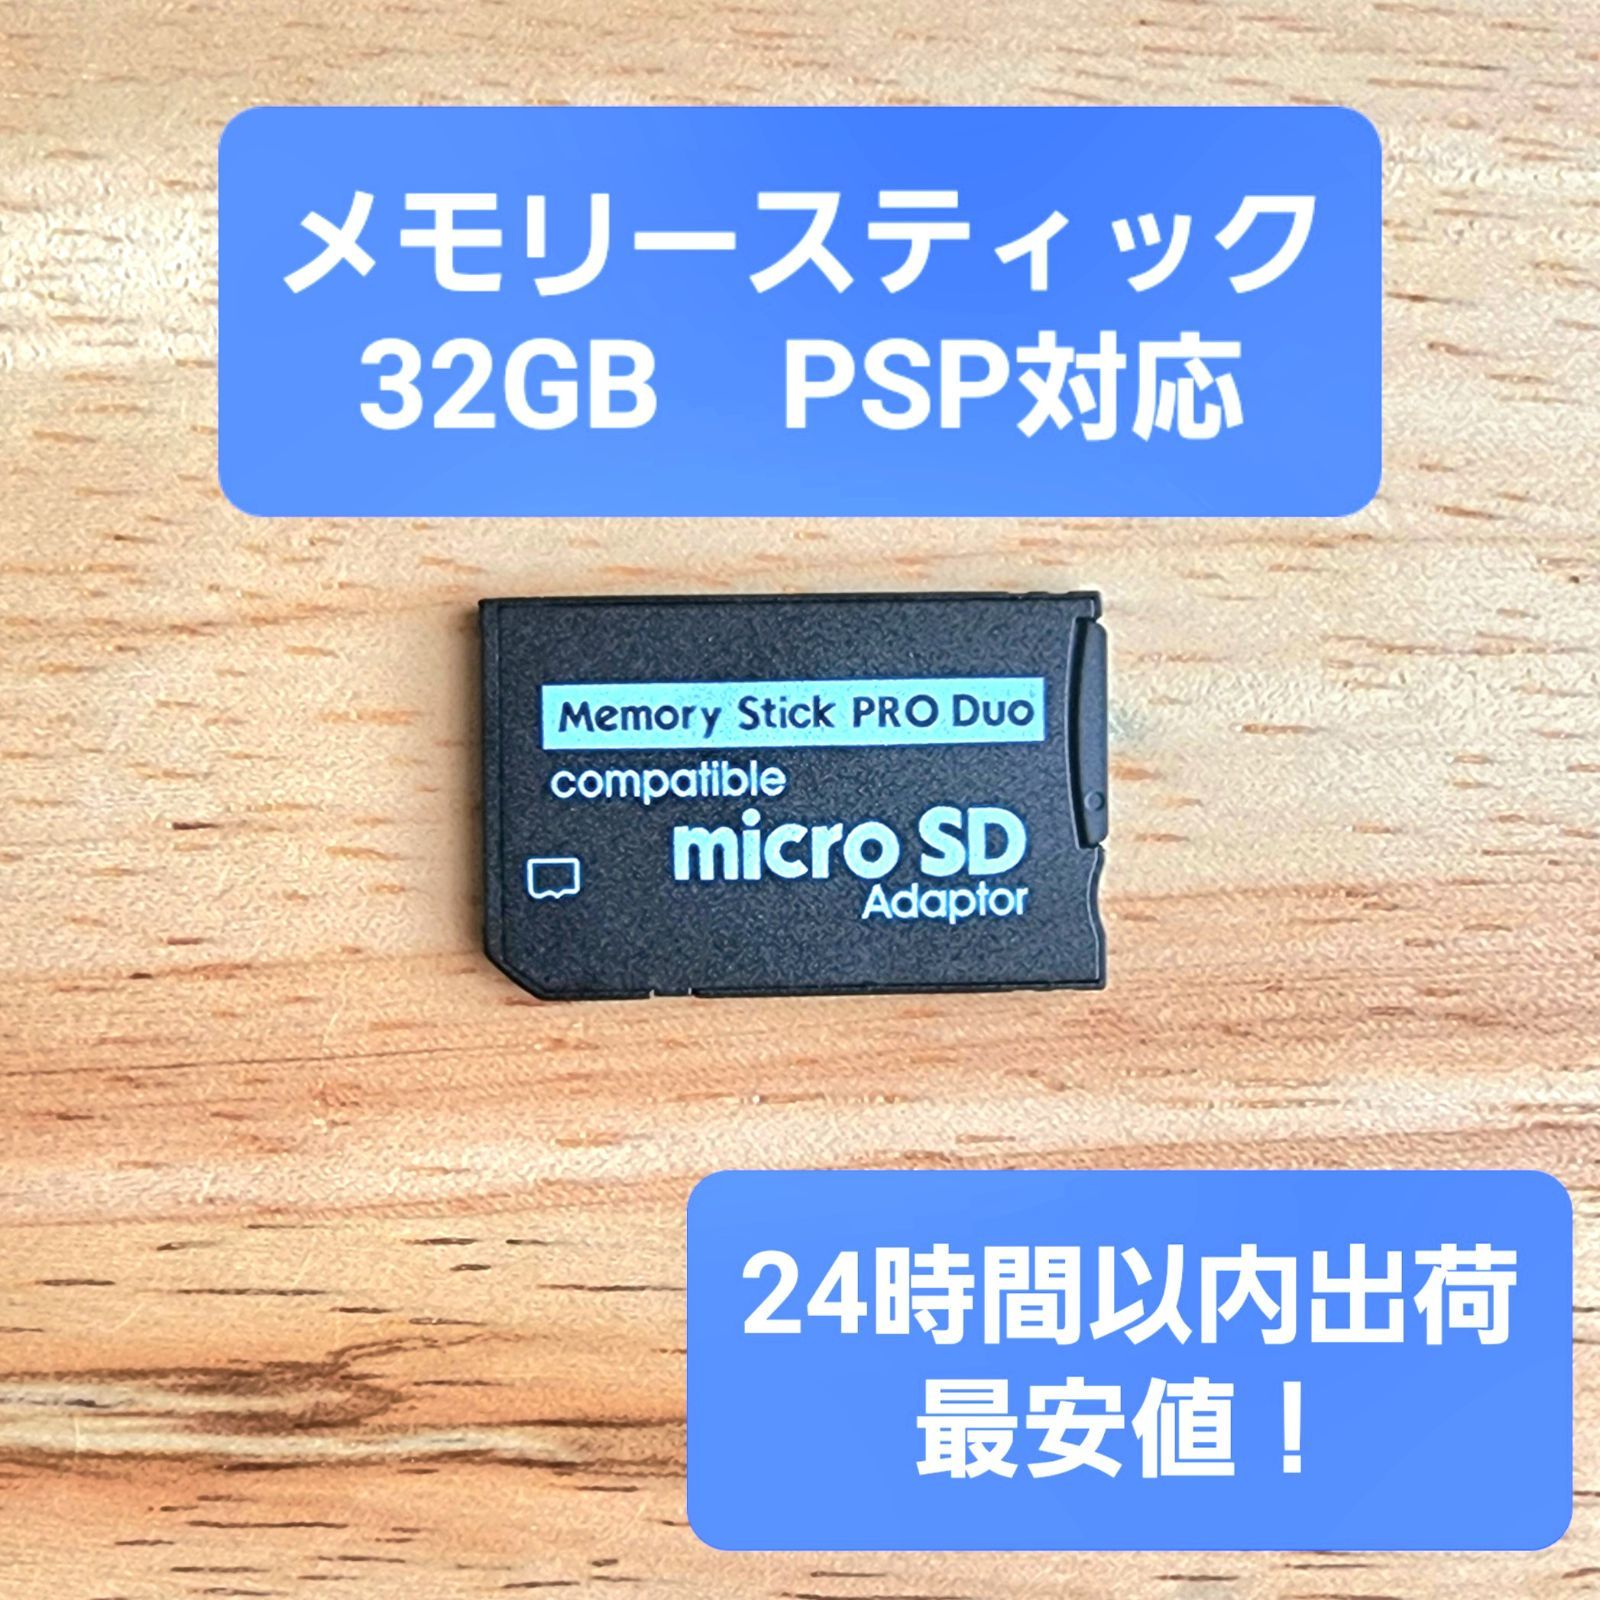 PSP]新品 メモリースティック PROデュオ 32GB - メルカリ